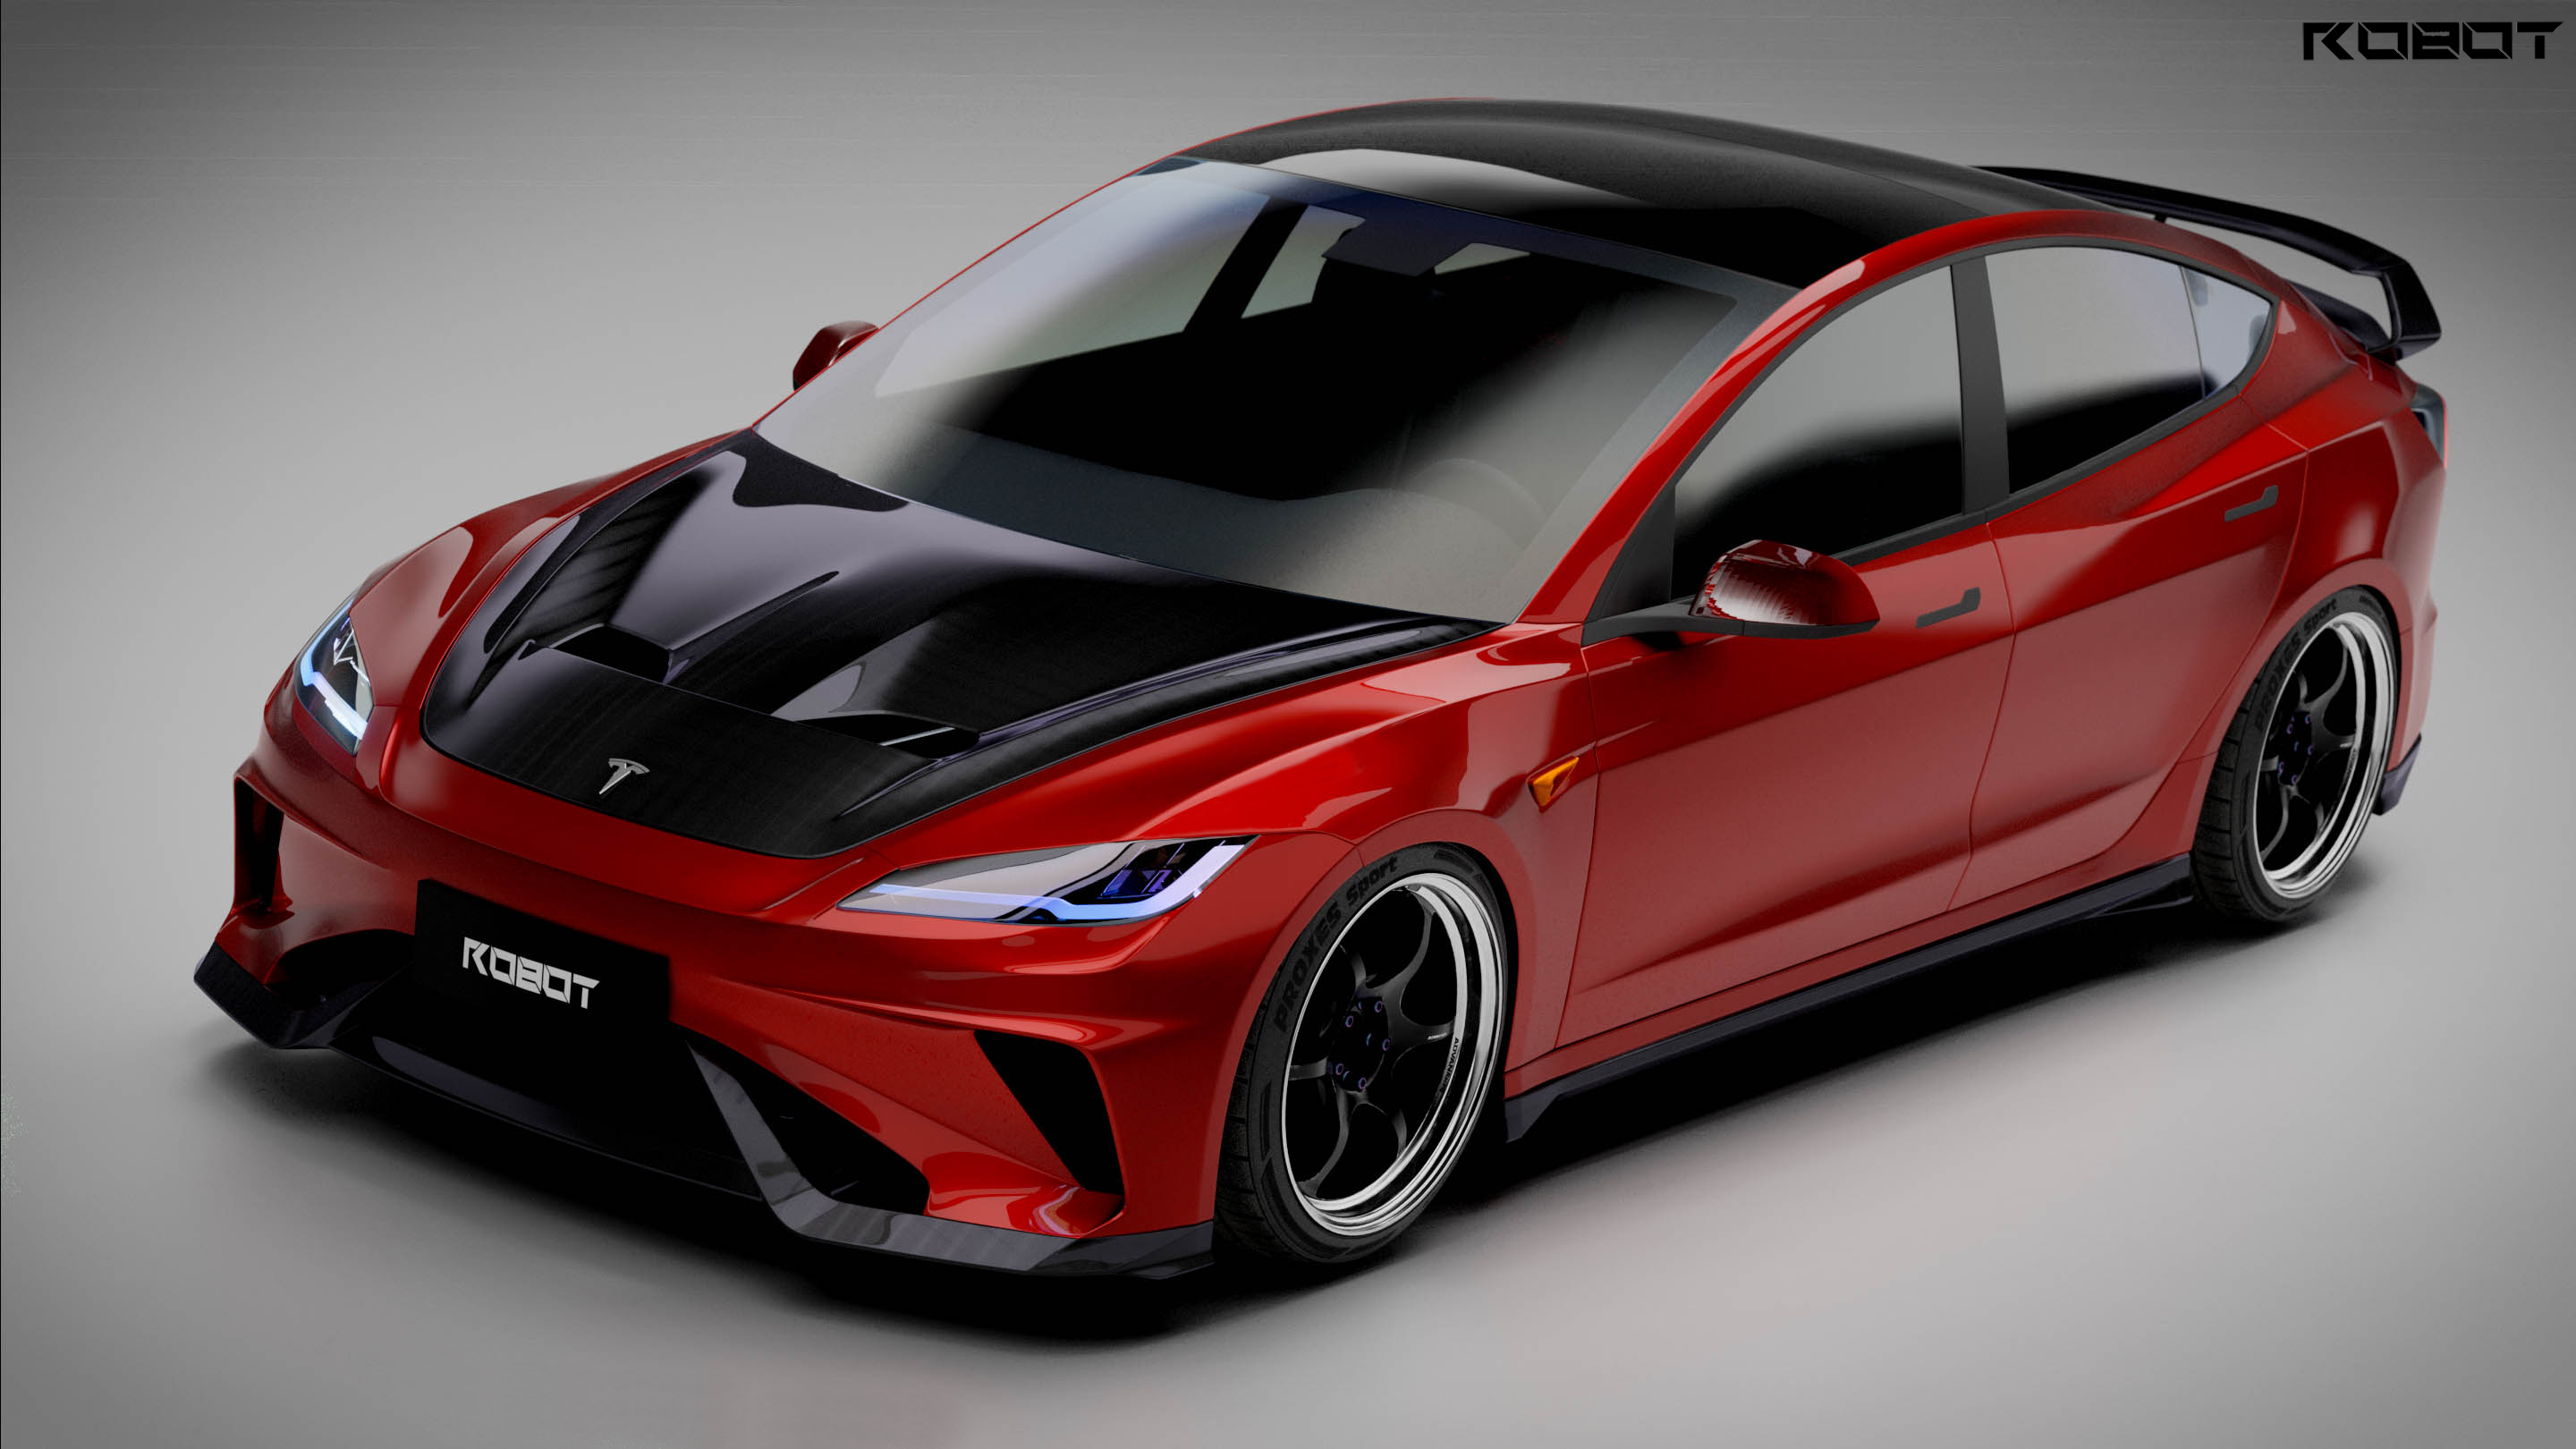 Robot Hacker Narrow Body Front Bumper & Lip for Tesla Model 3 Highland